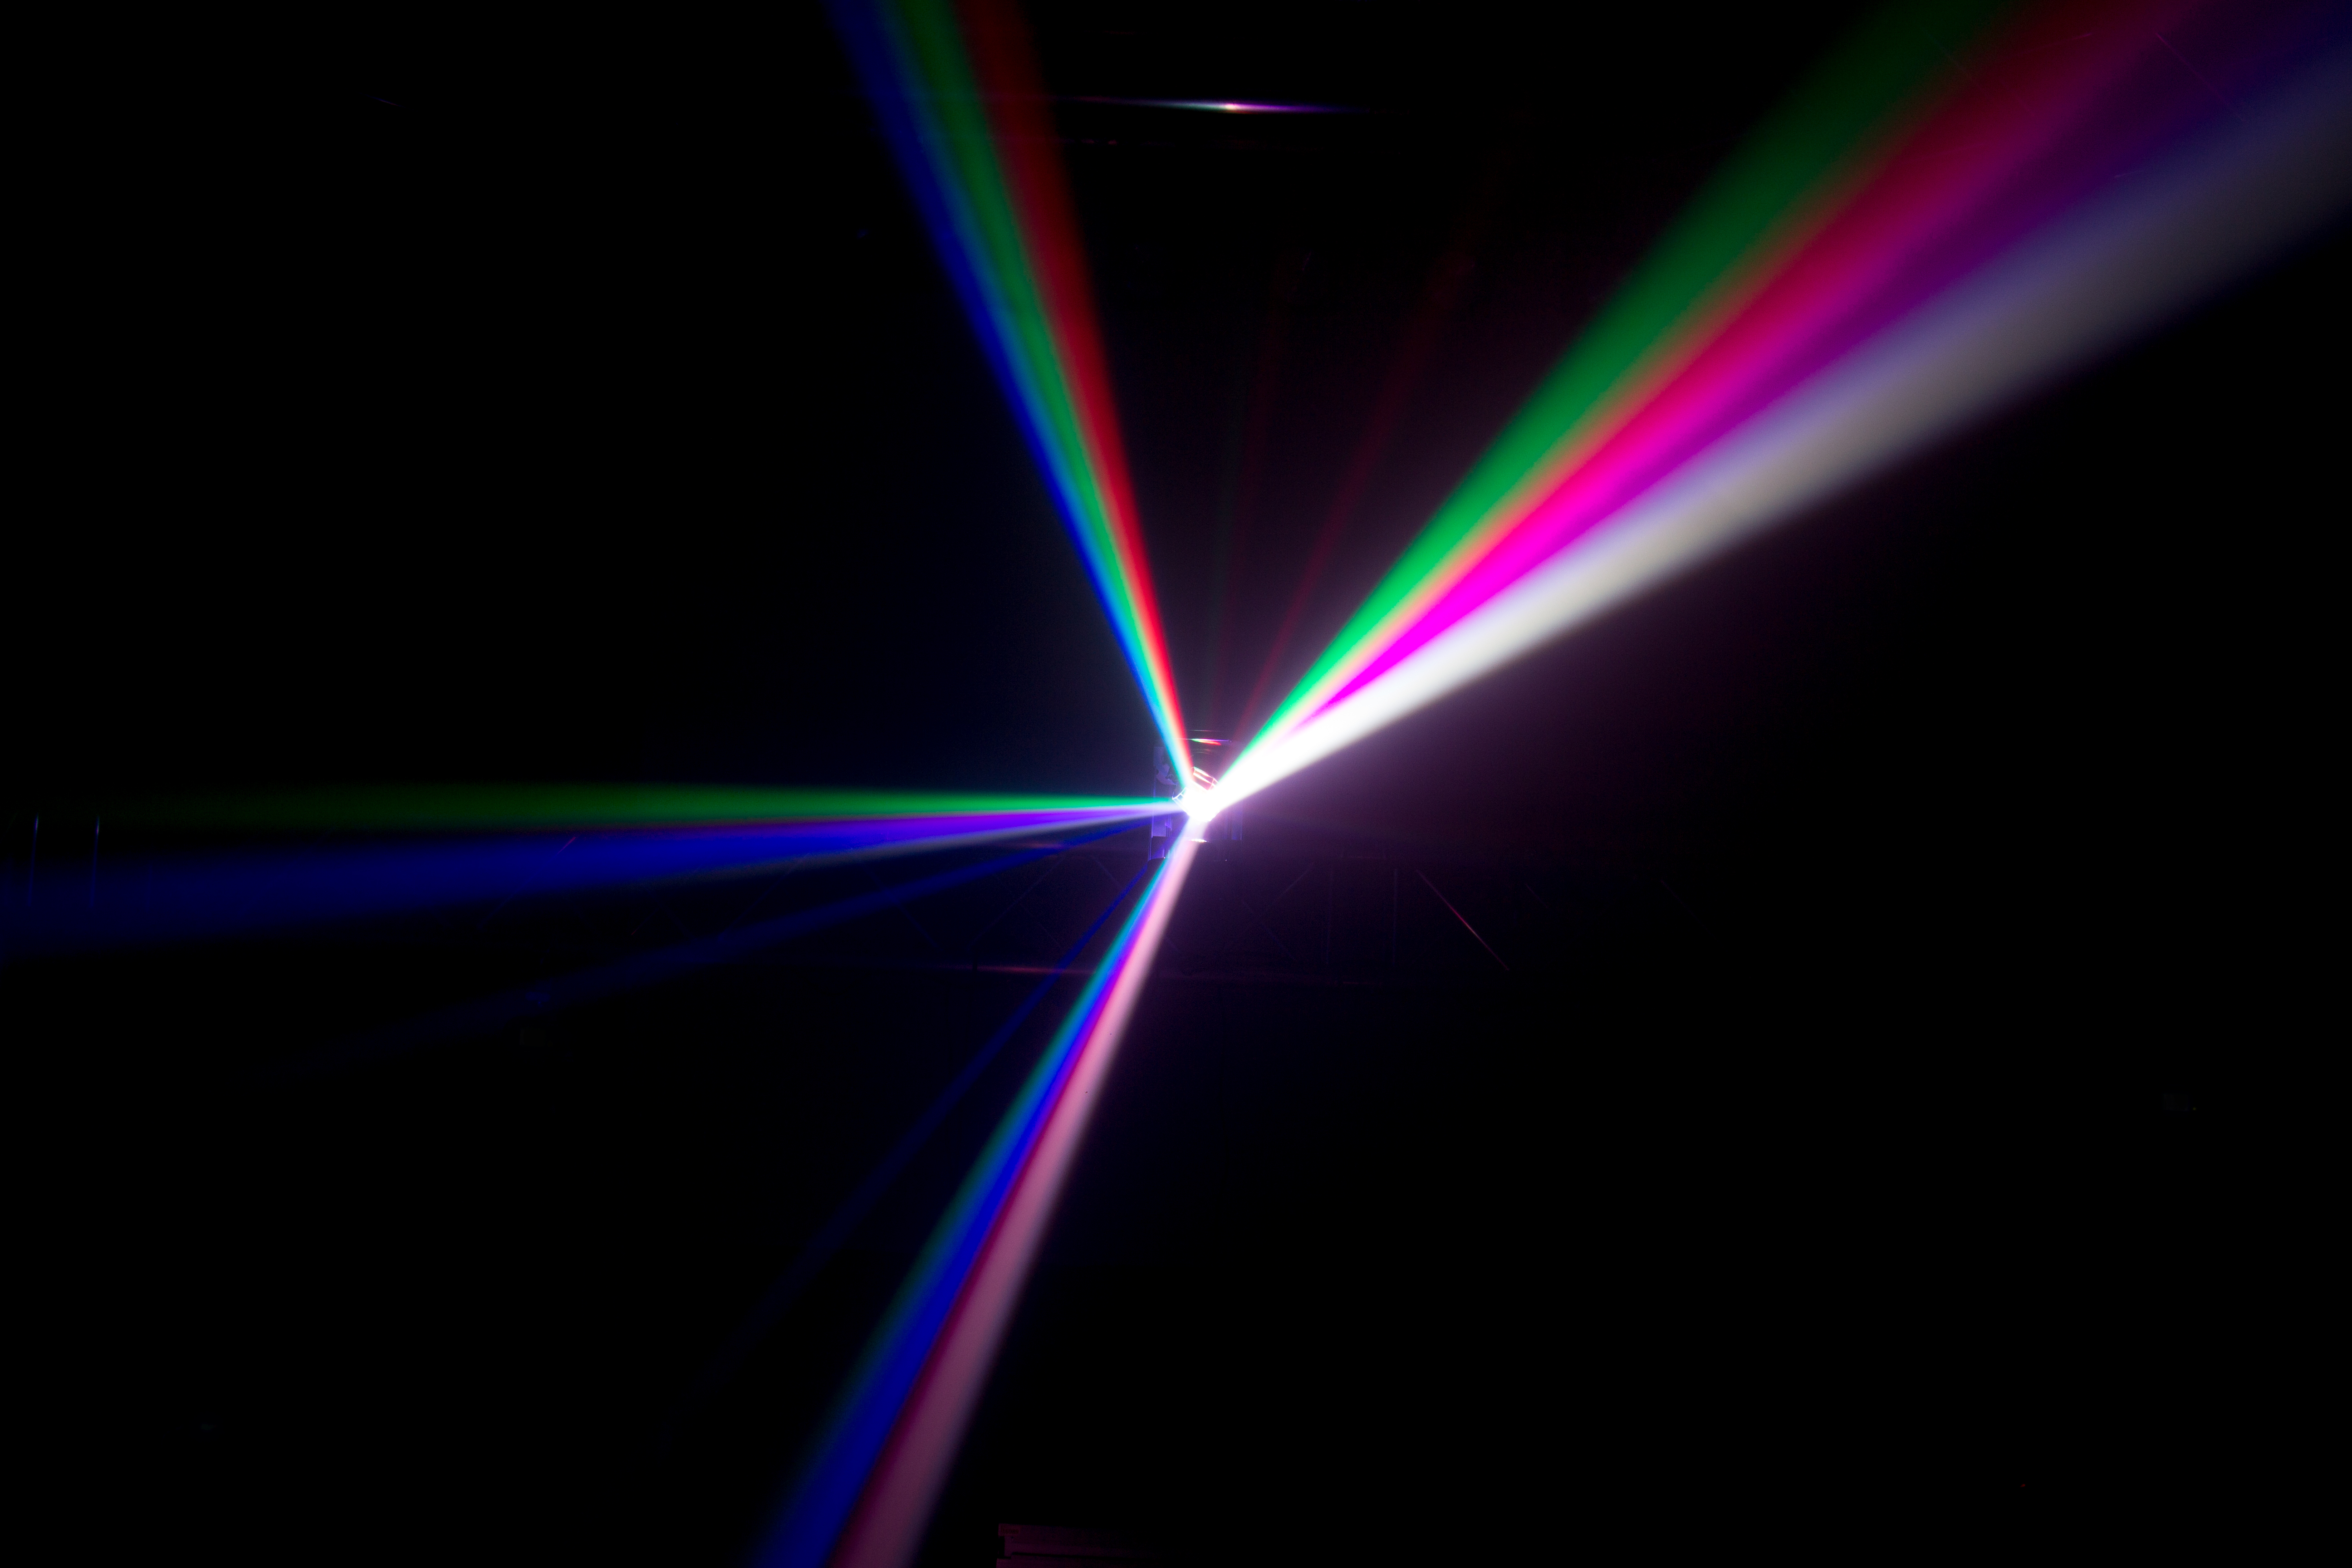 jeu de lumière à LED DMX light JBSystems JB Systems LED Rainbow